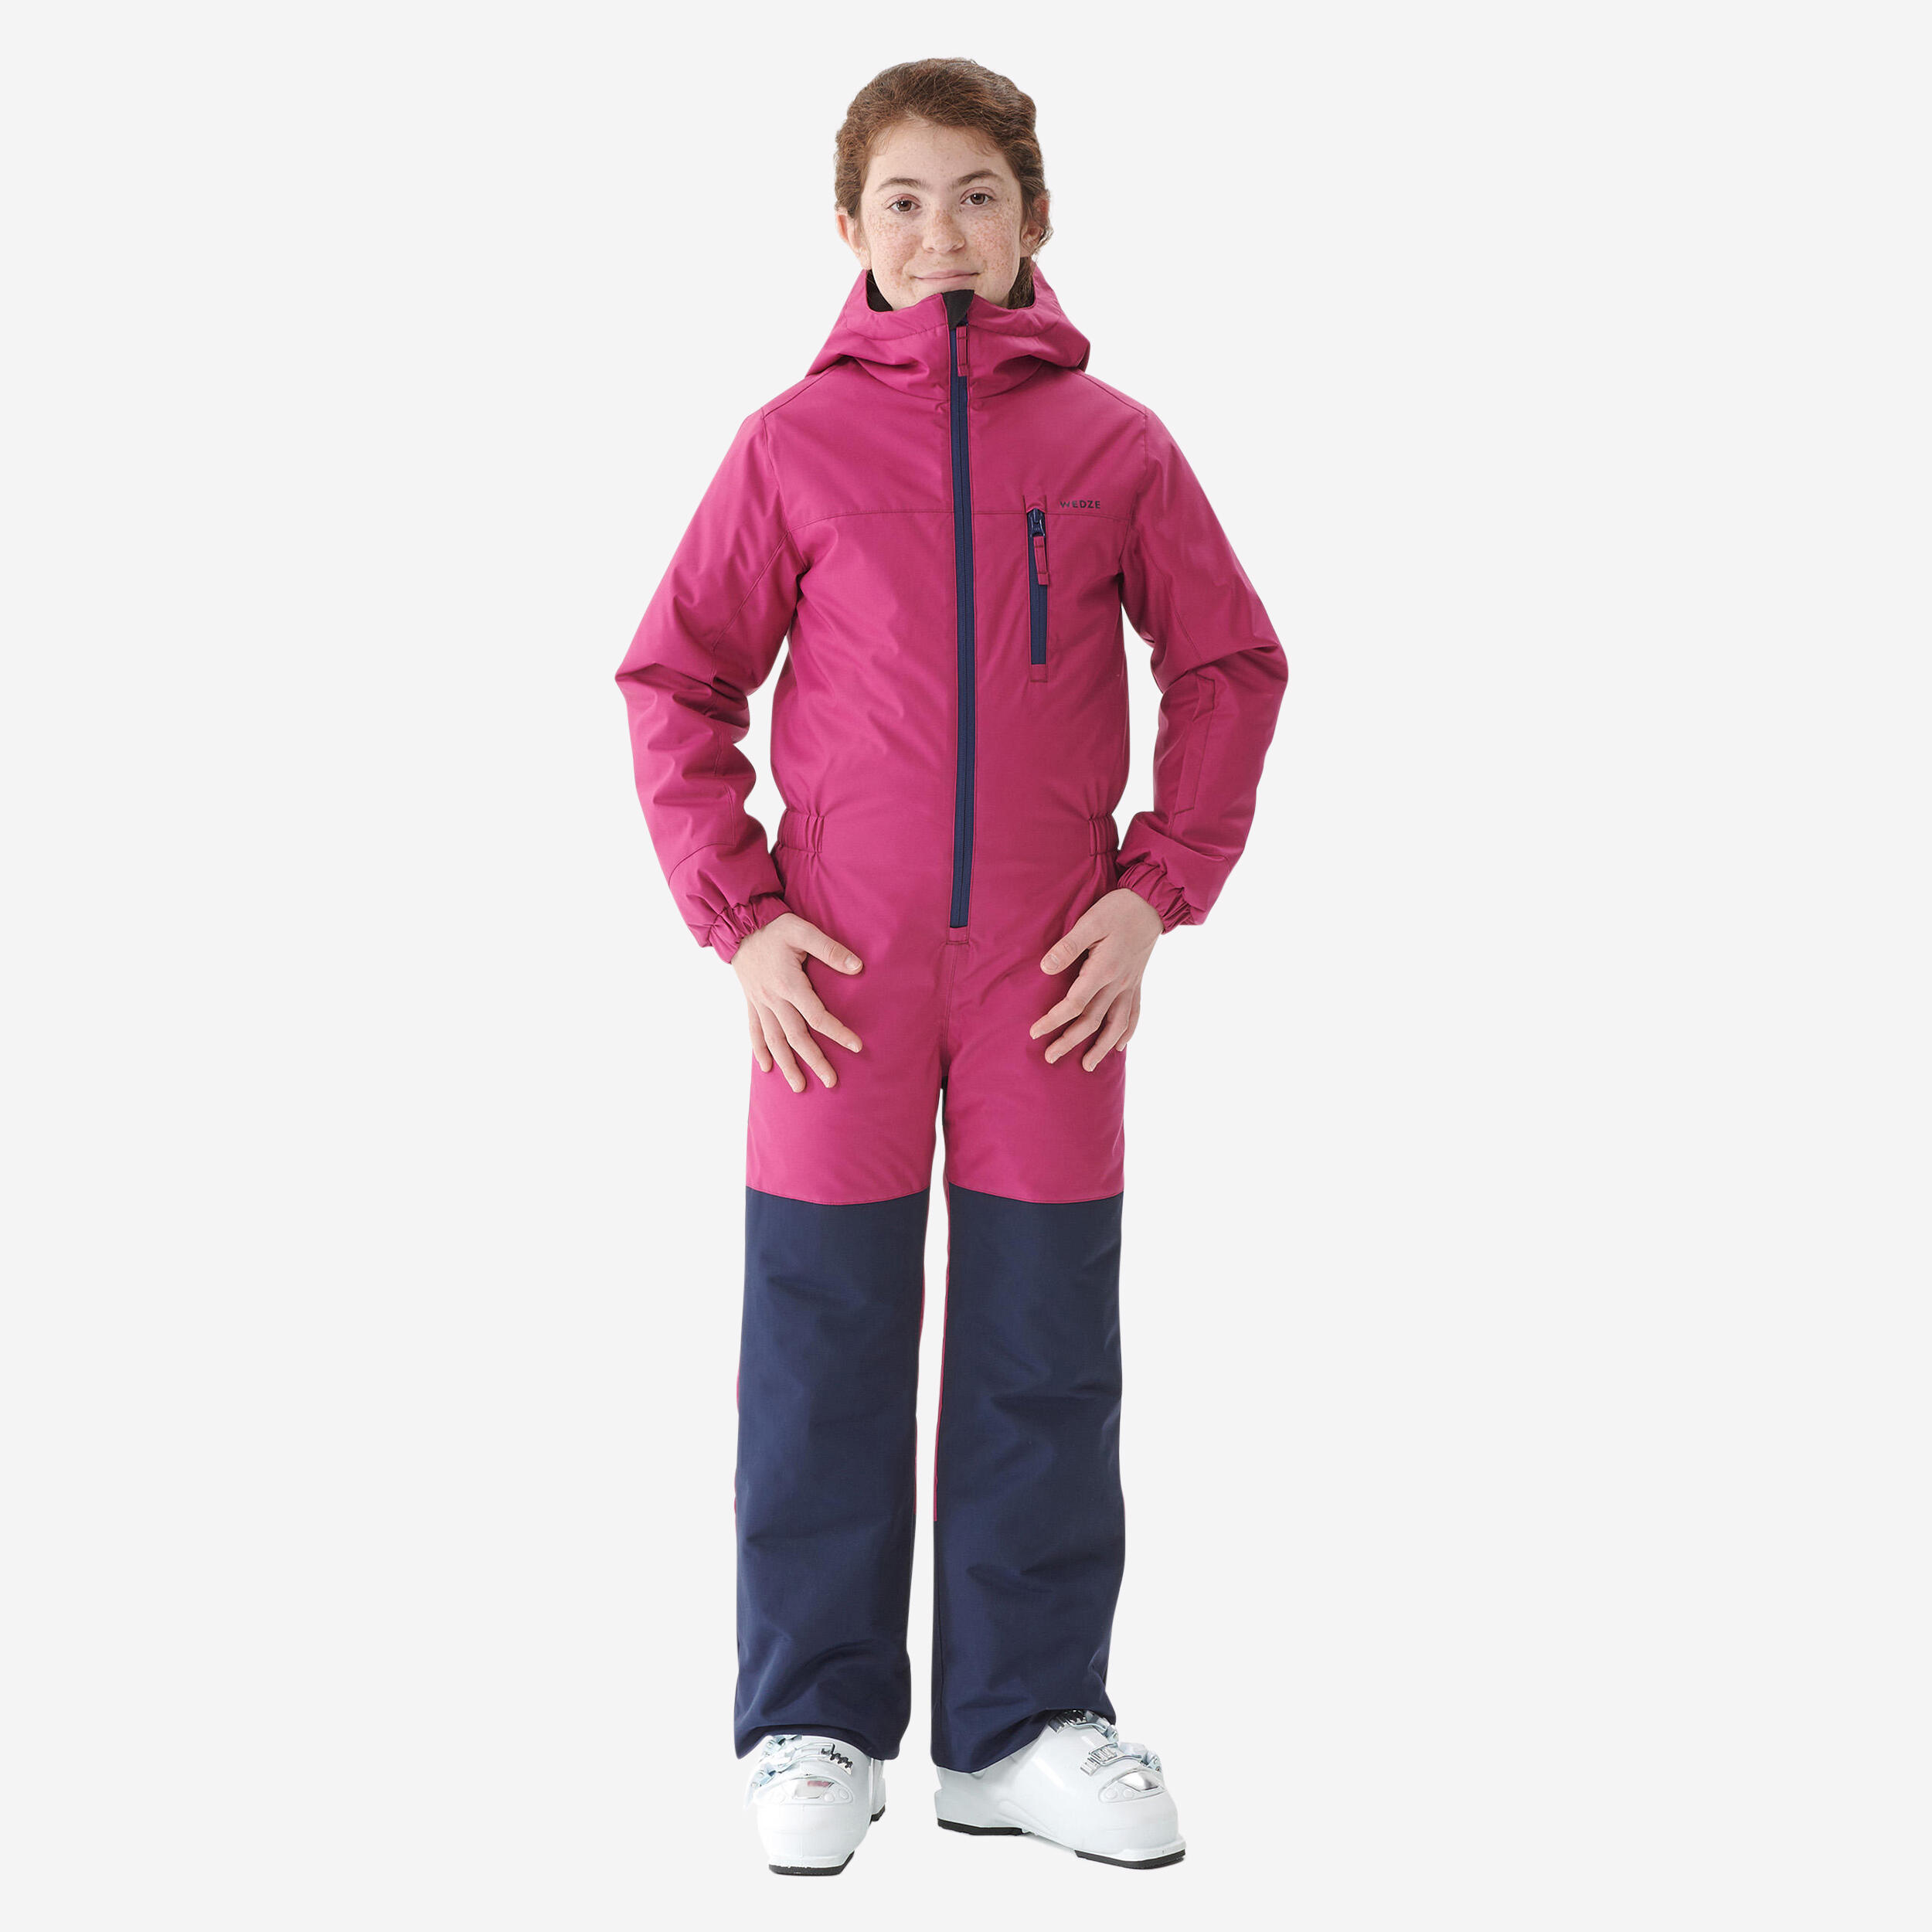 Kids’ Snowsuit - 100 Pink/Navy Blue - WEDZE